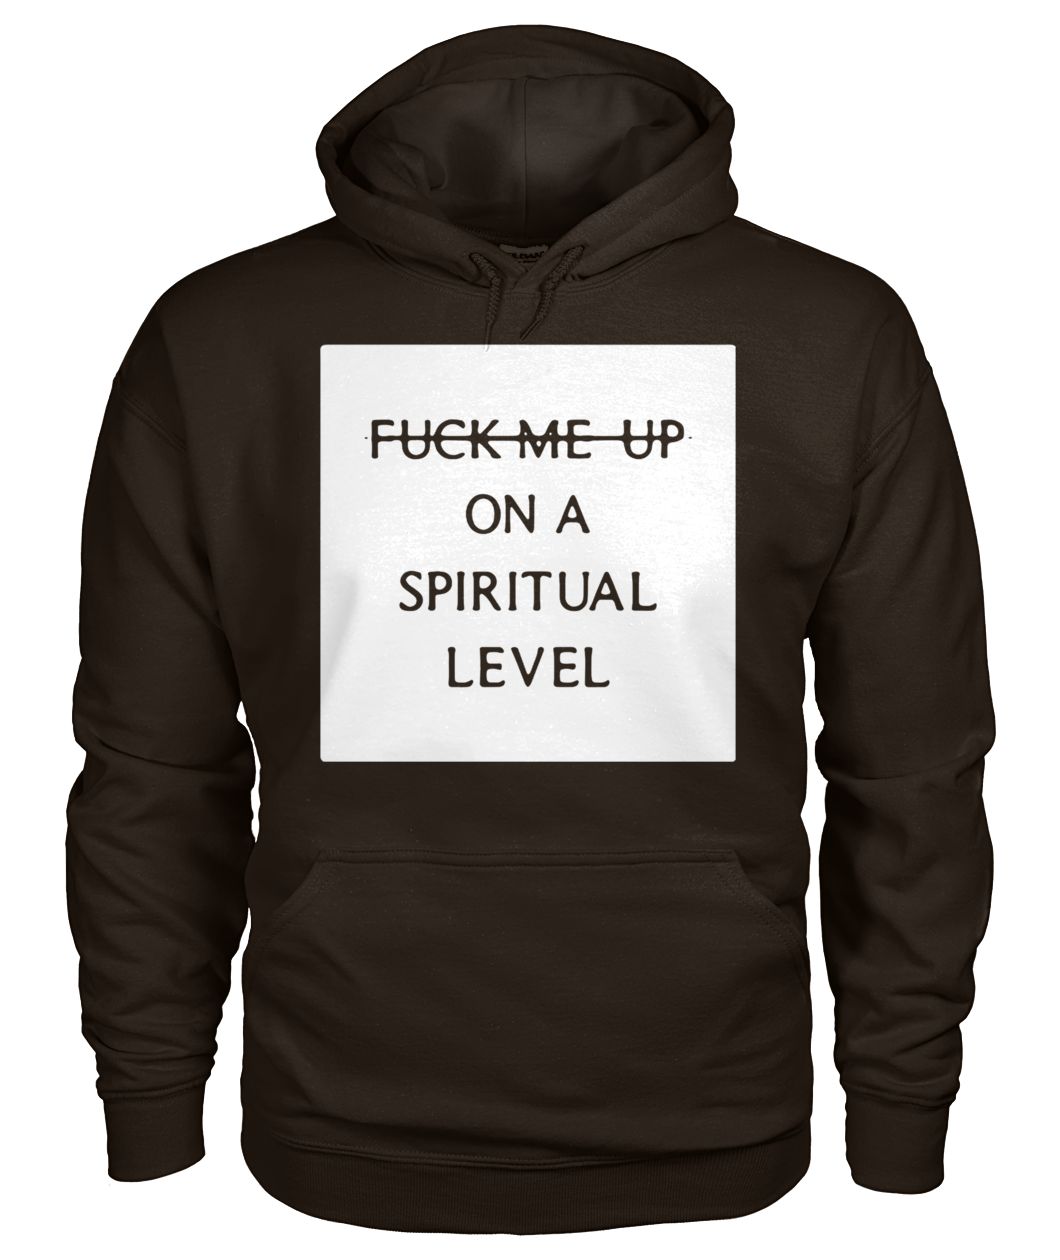 Fuck me up on a spiritual level gildan hoodie